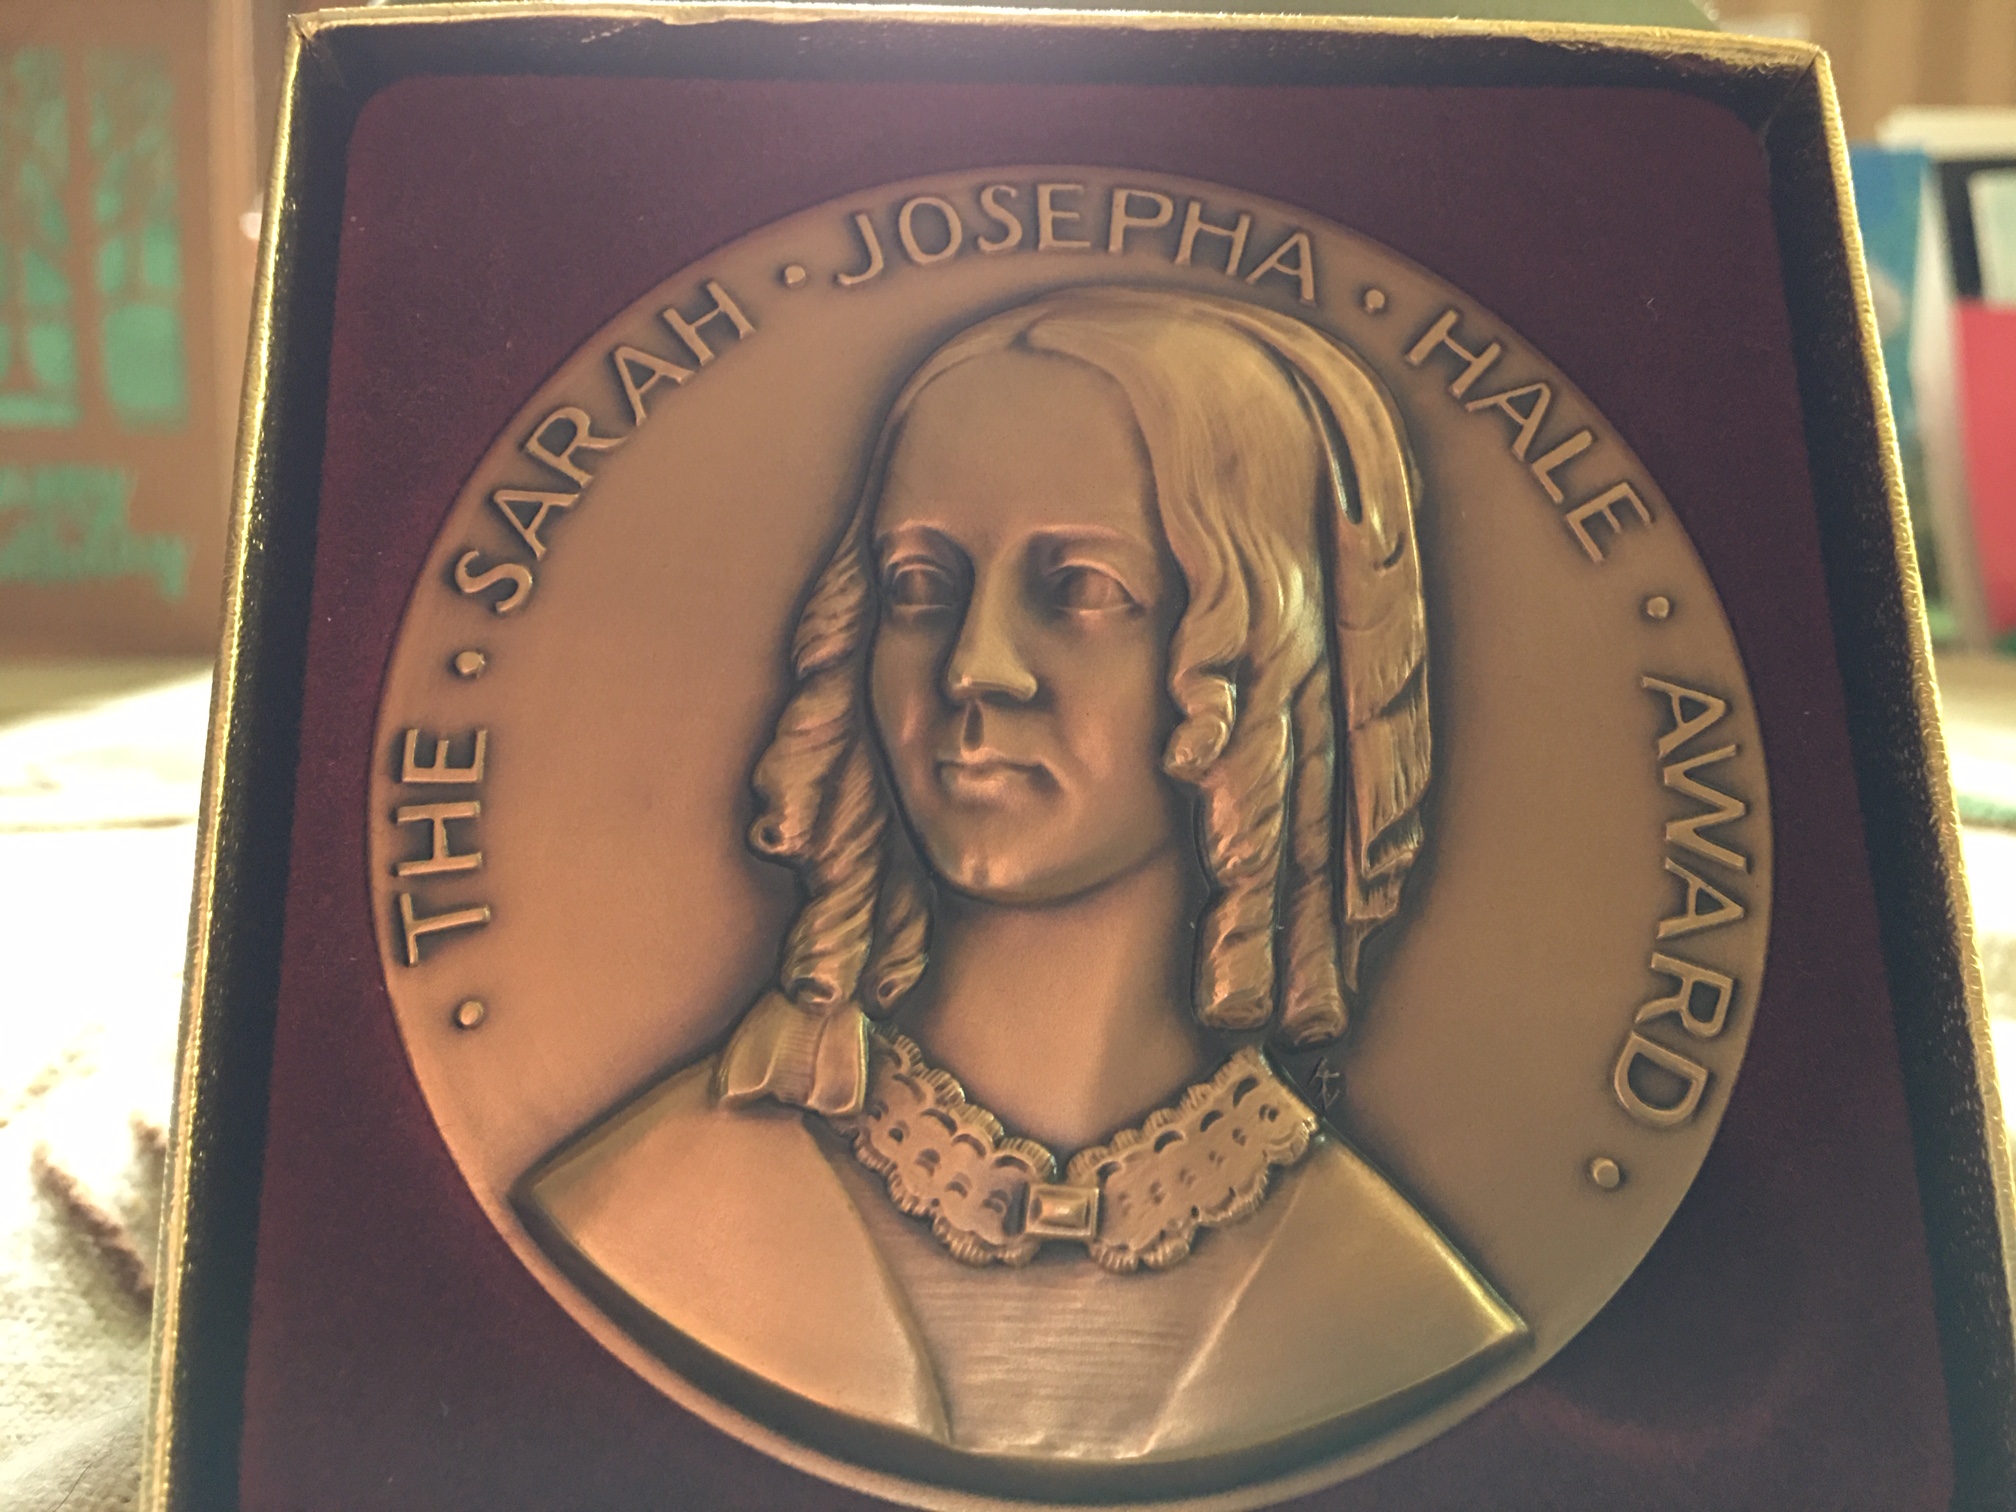 The Sarah Josepha Hale Award